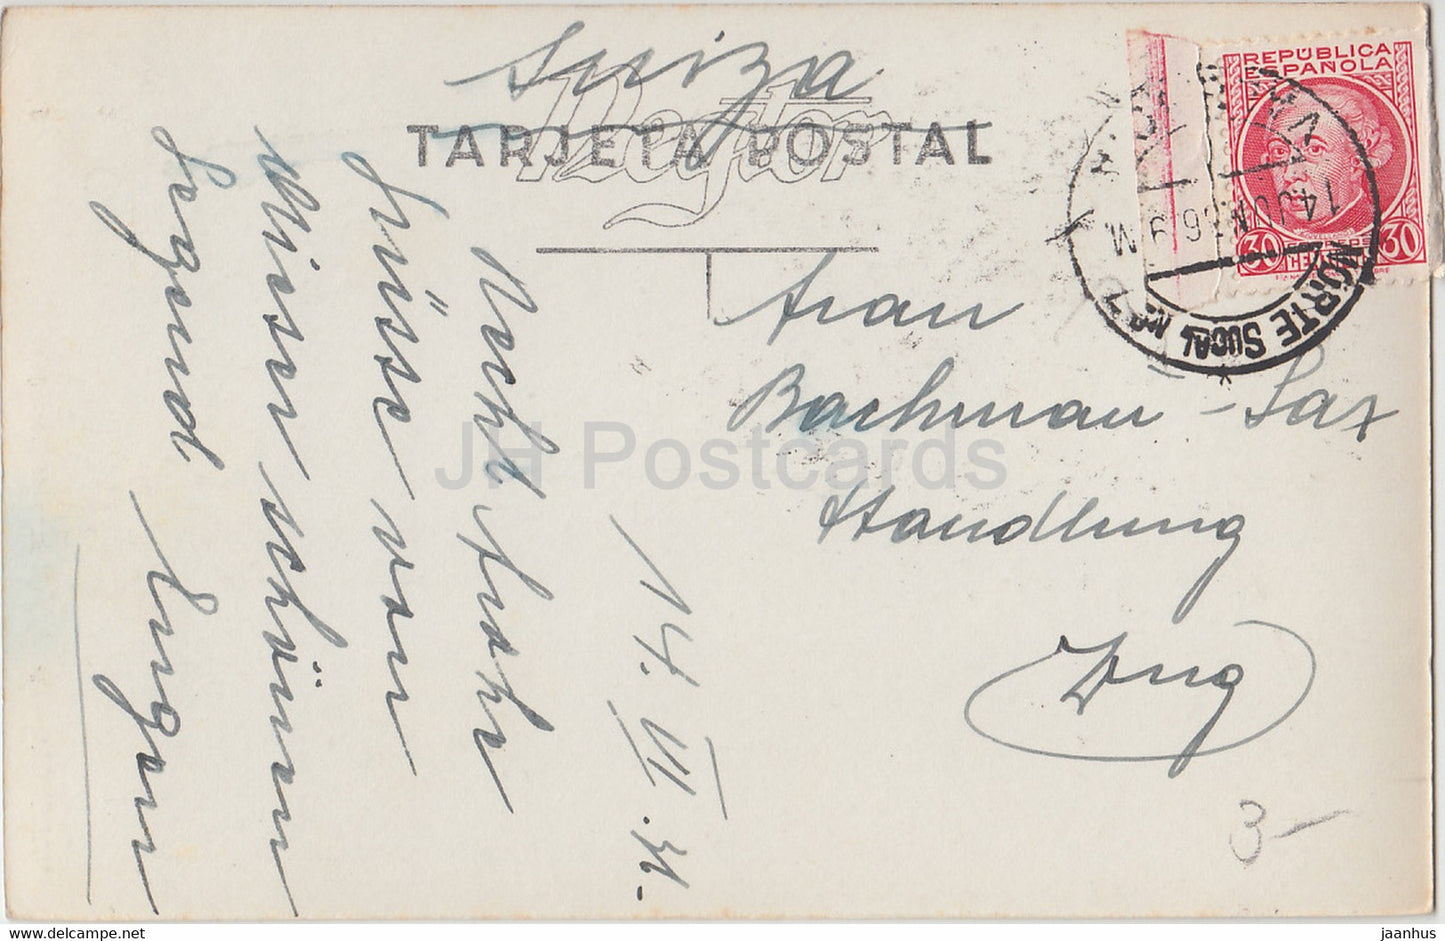 Valence - Huerto de Naranjas - 153 - carte postale ancienne - 1936 - Espagne - utilisé